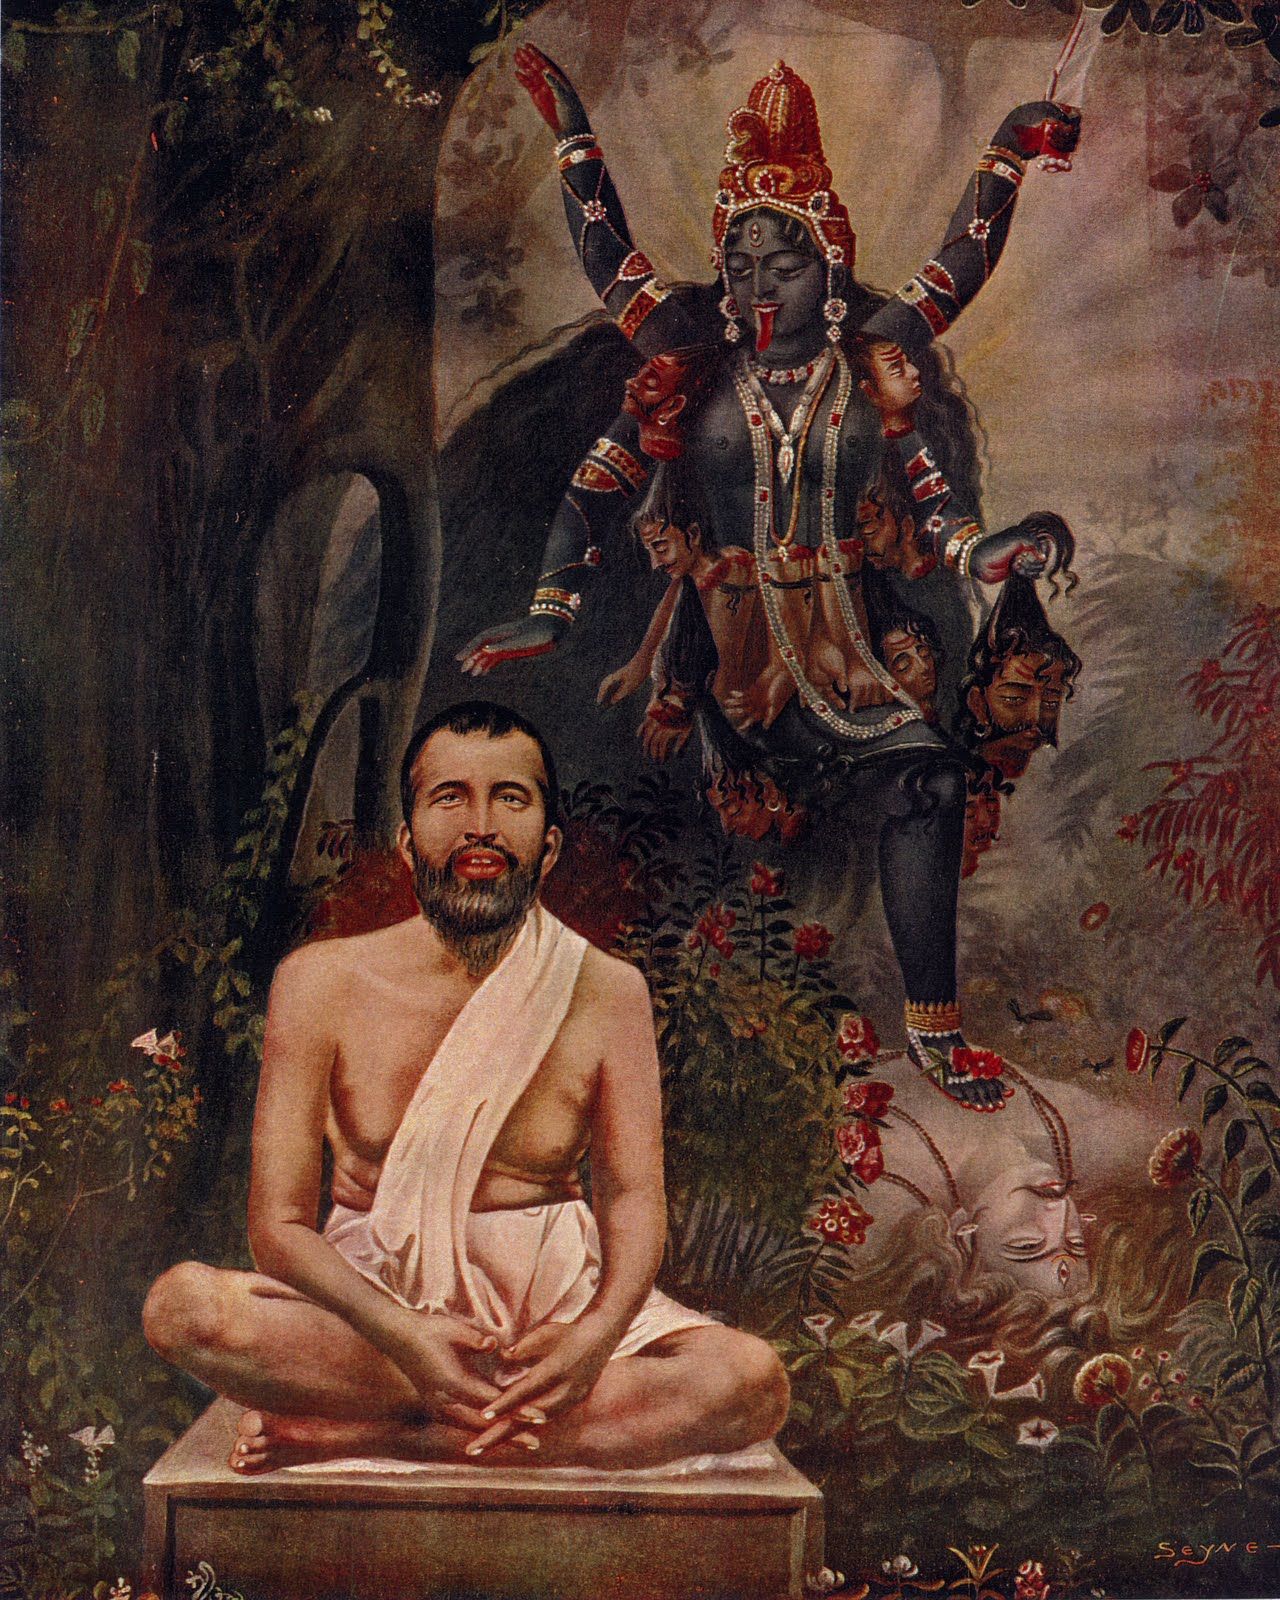 Sri Ramakrishna, the Godman who lived at the Dakshineswar Kali ...